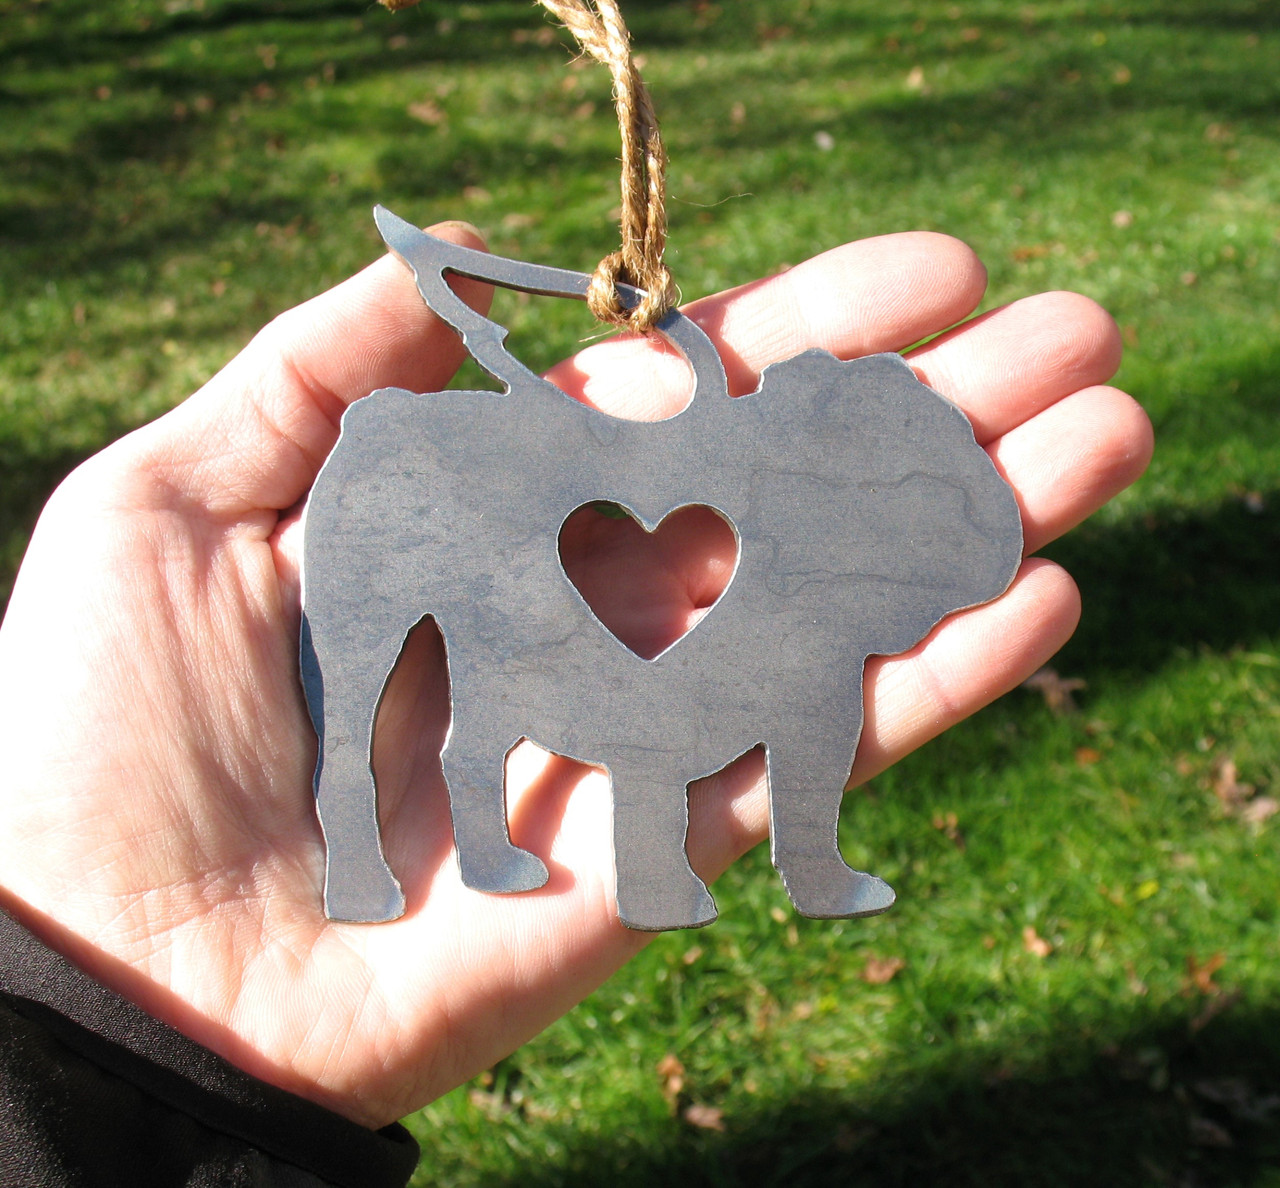 English Bulldog 3 Pet Loss Gift Ornament Angel - Pet Memorial - Dog Sympathy Remembrance Gift - Metal Dog Christmas Ornament 